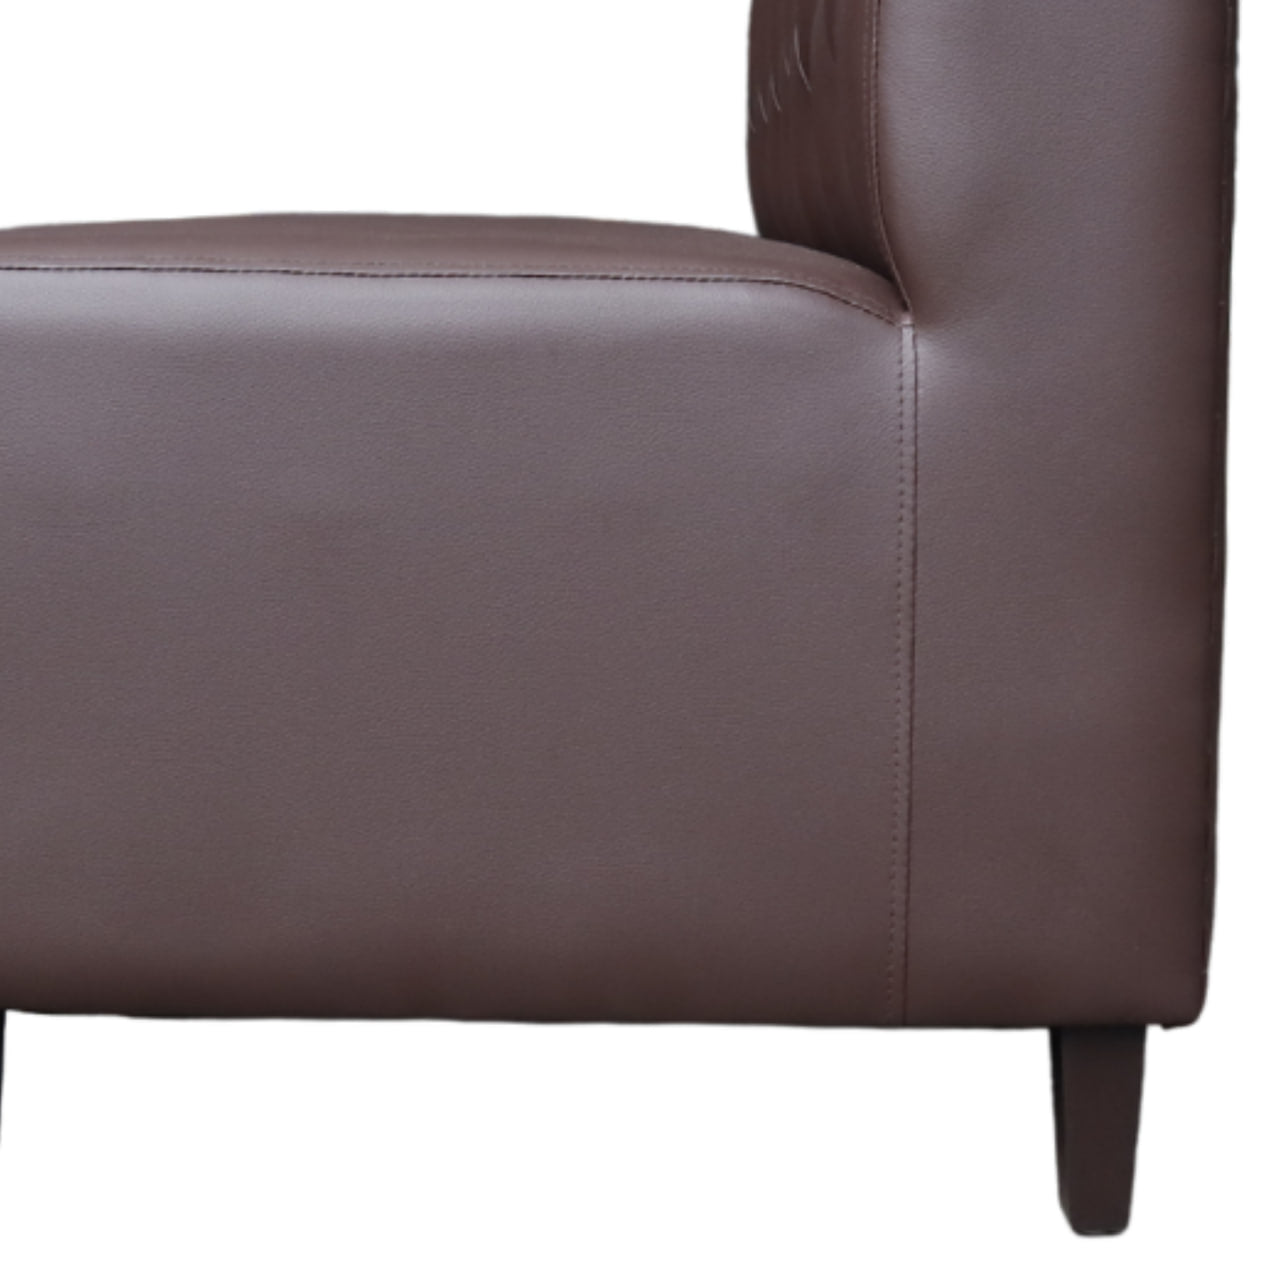 BERNARD Armless Fabric Couch AF Home